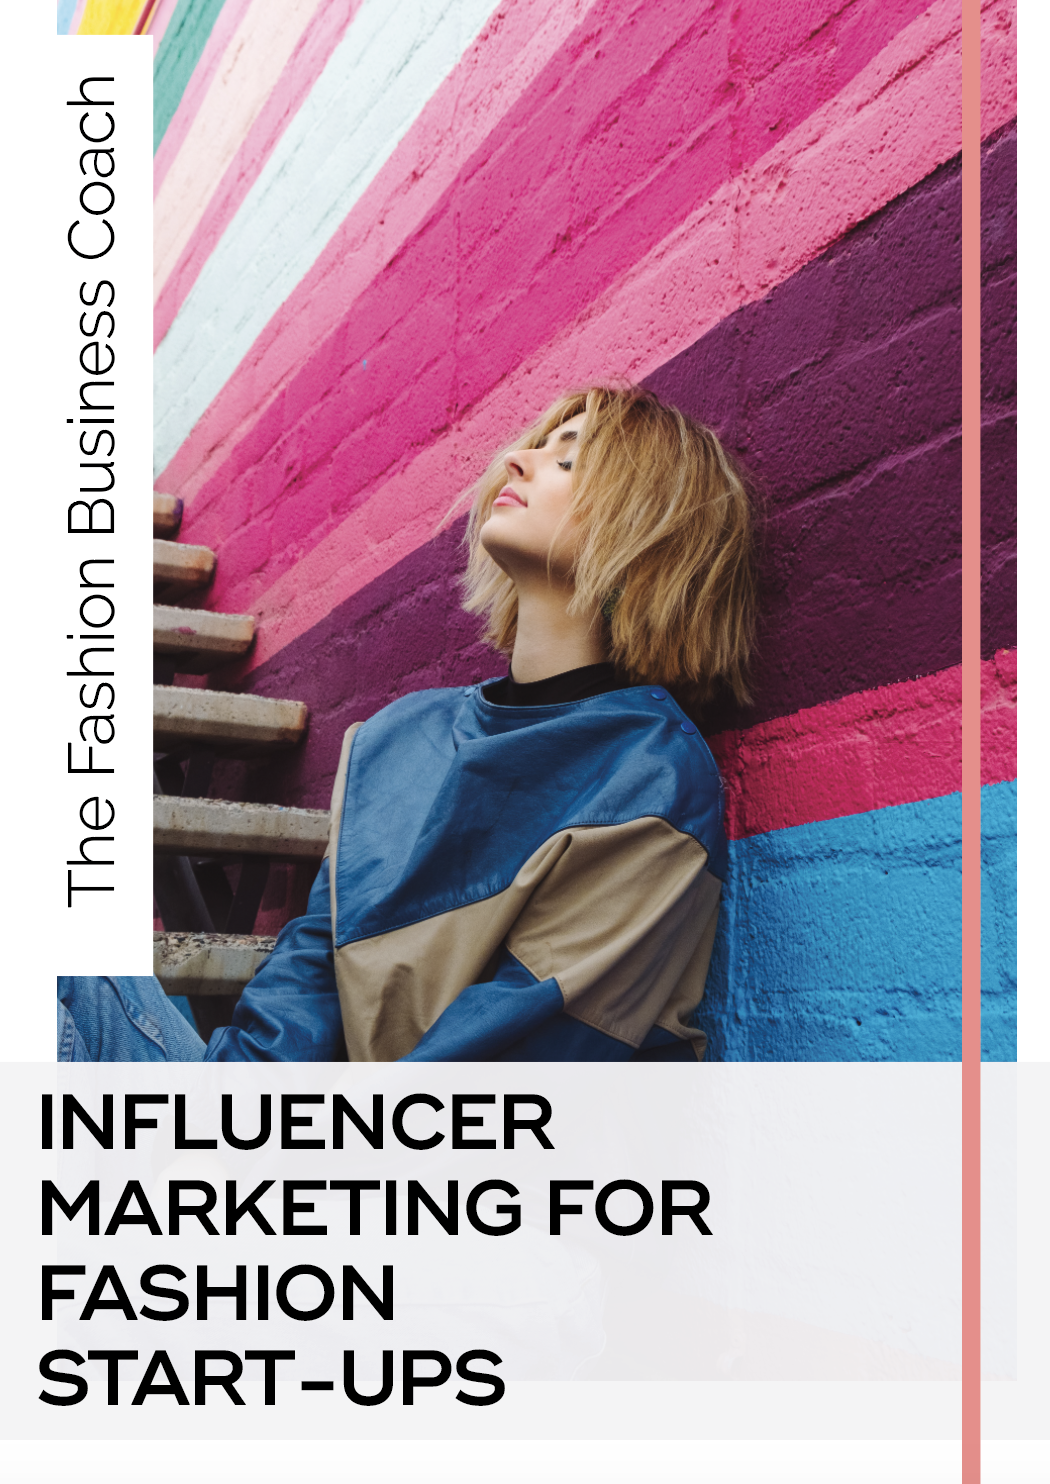 Influencer Marketing for Fashion Start-Ups 1.png